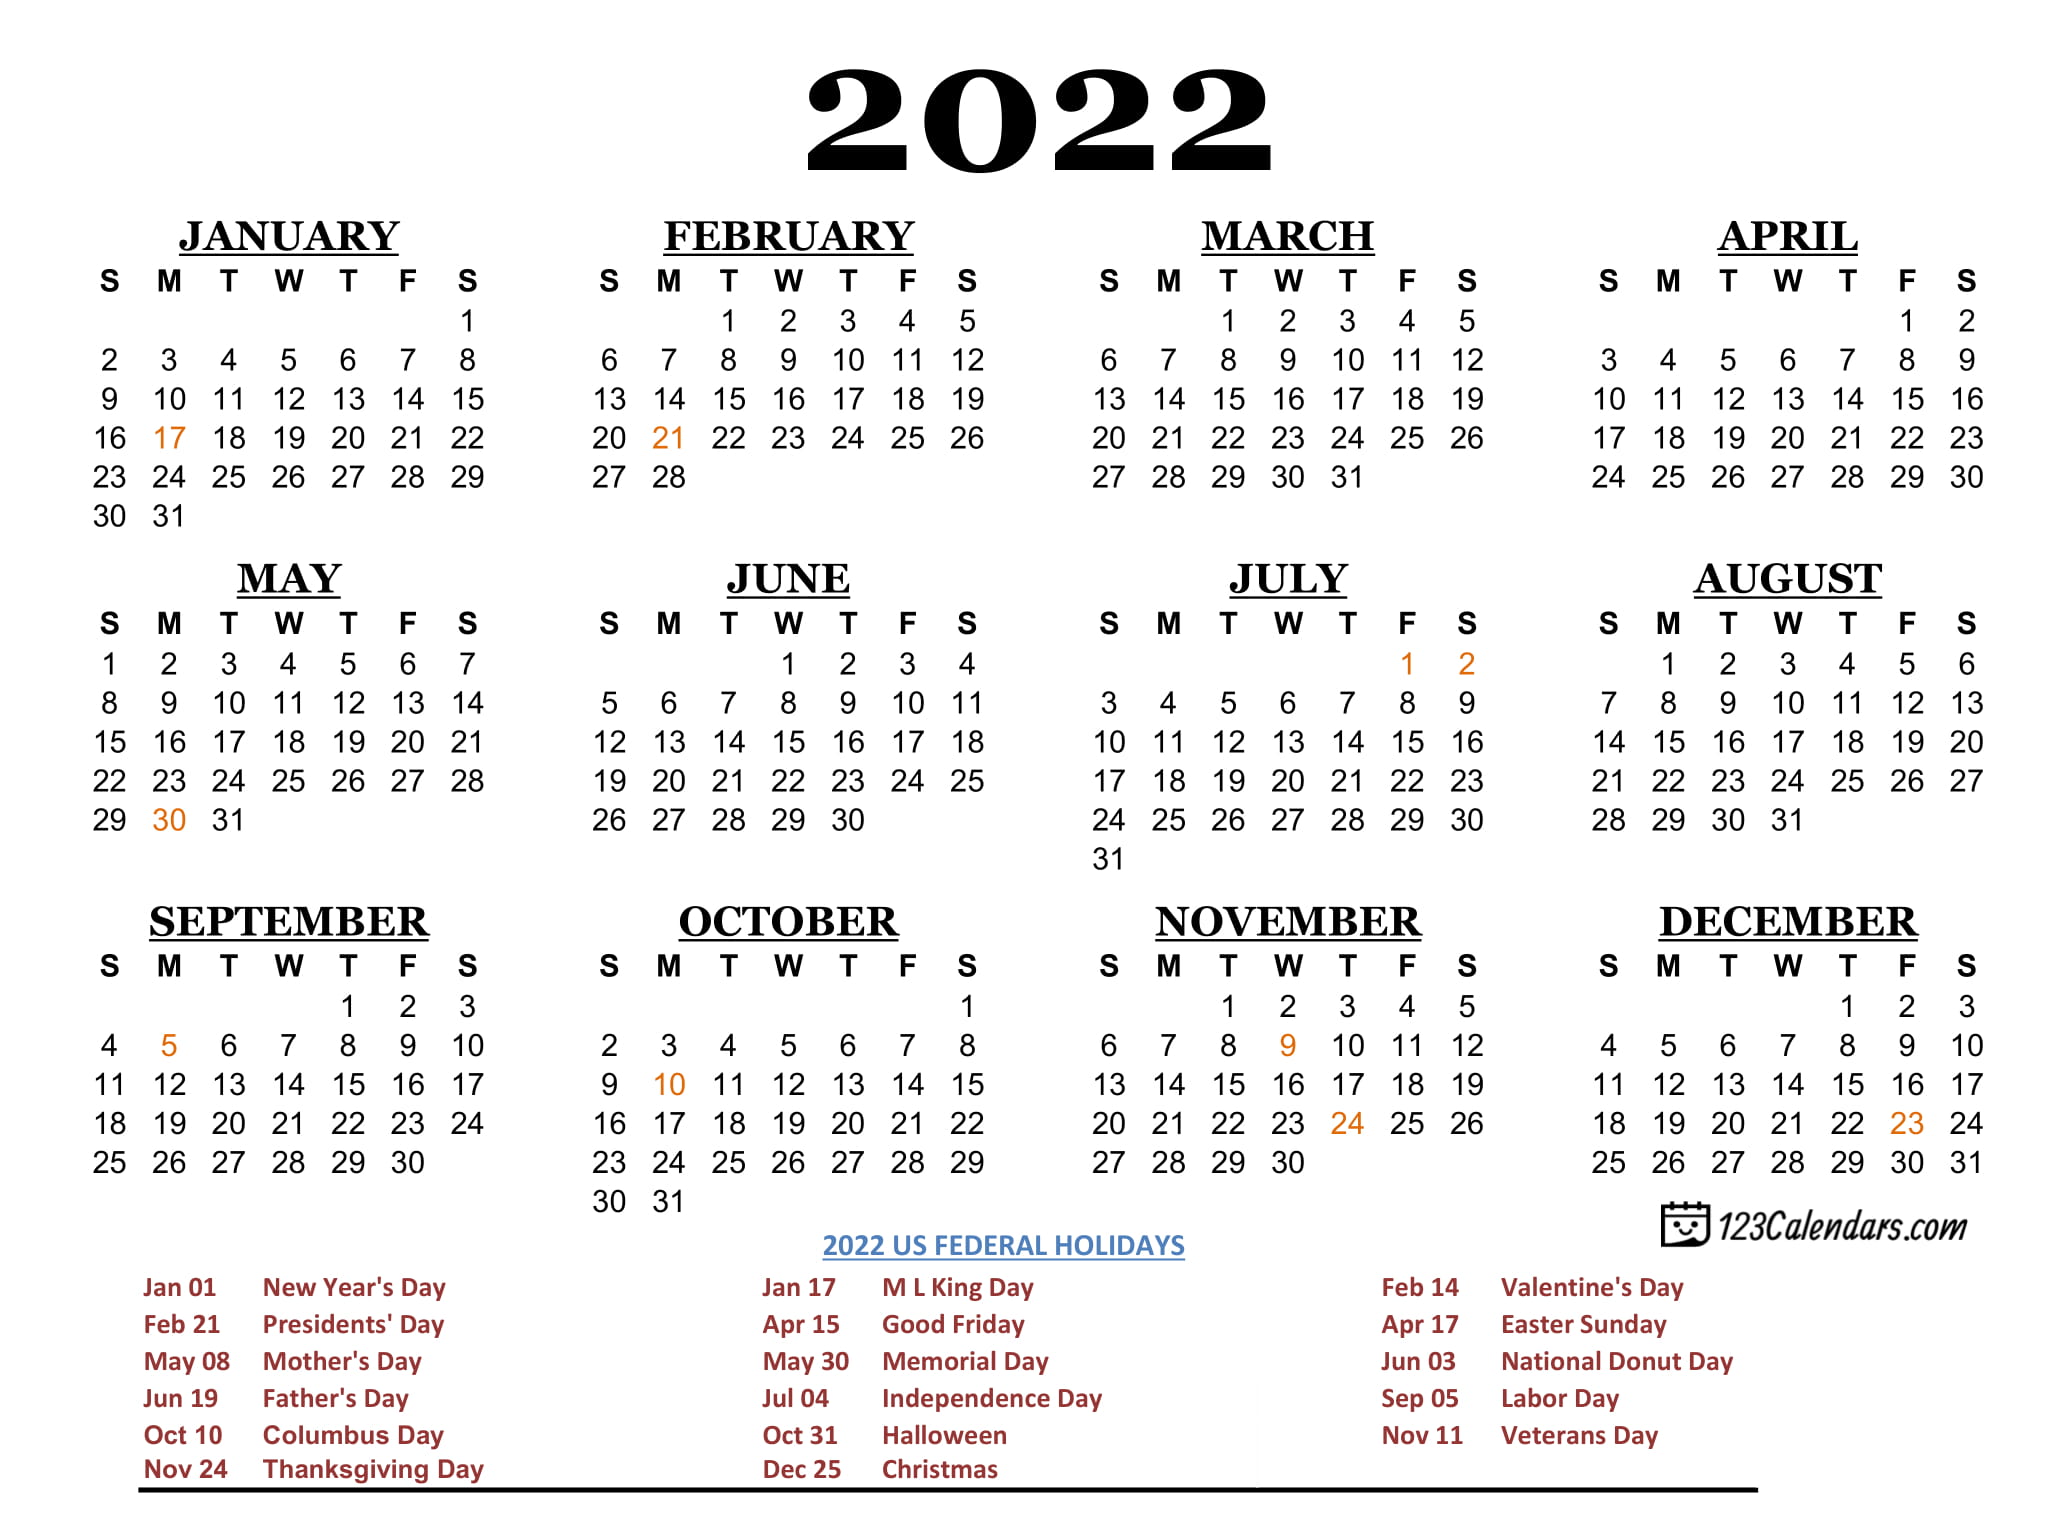 Day Of The Year Calendar 2022 Year 2022 Calendar Templates | 123Calendars.com